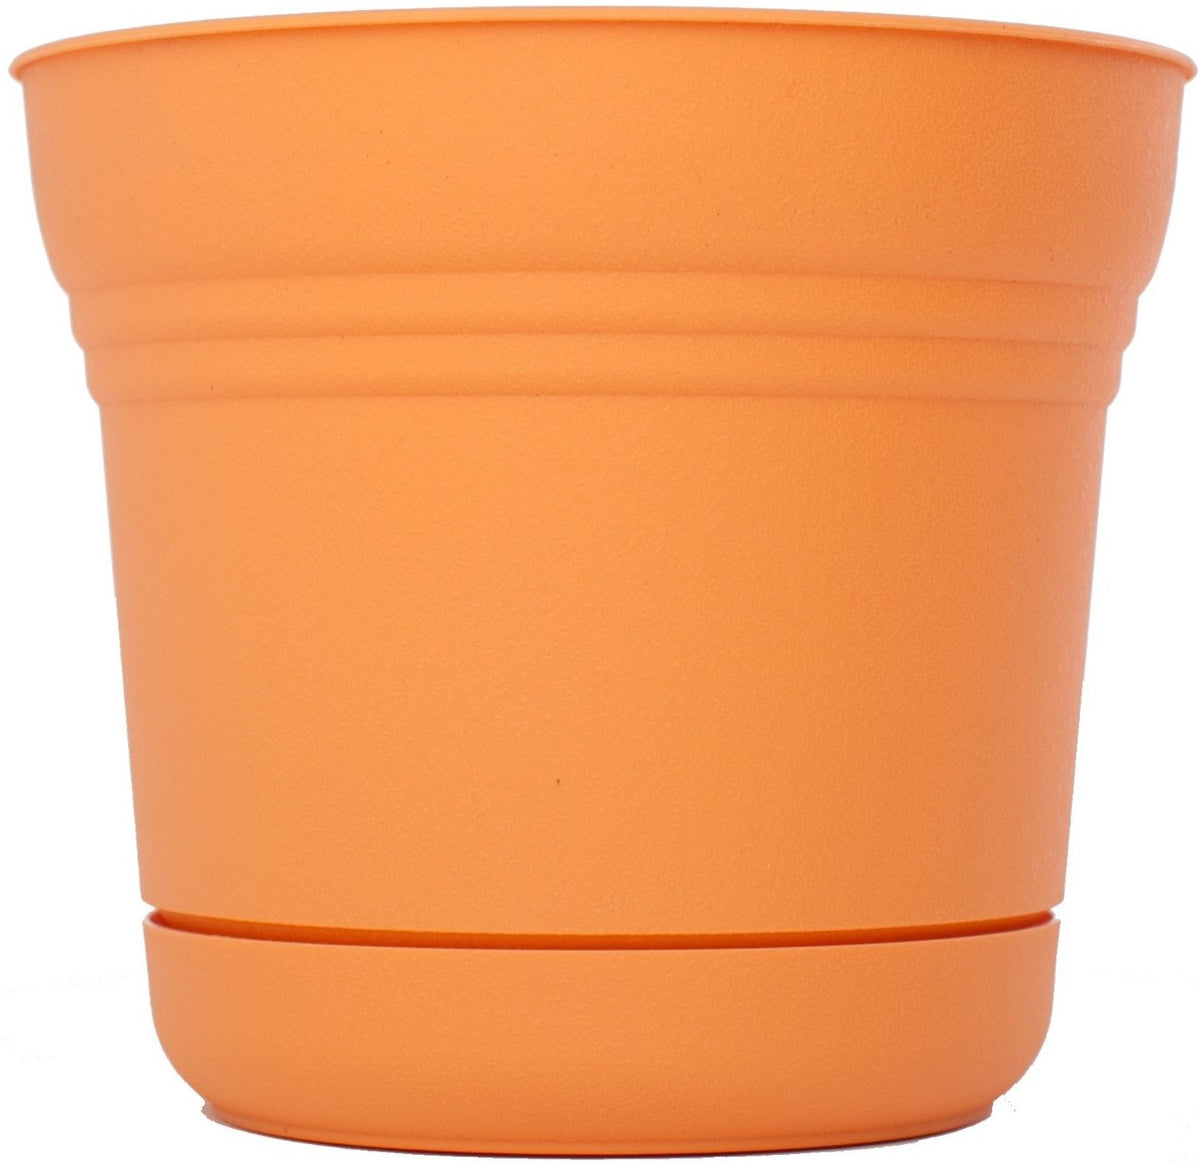 buy planters & pots at cheap rate in bulk. wholesale & retail landscape edging & fencing store.